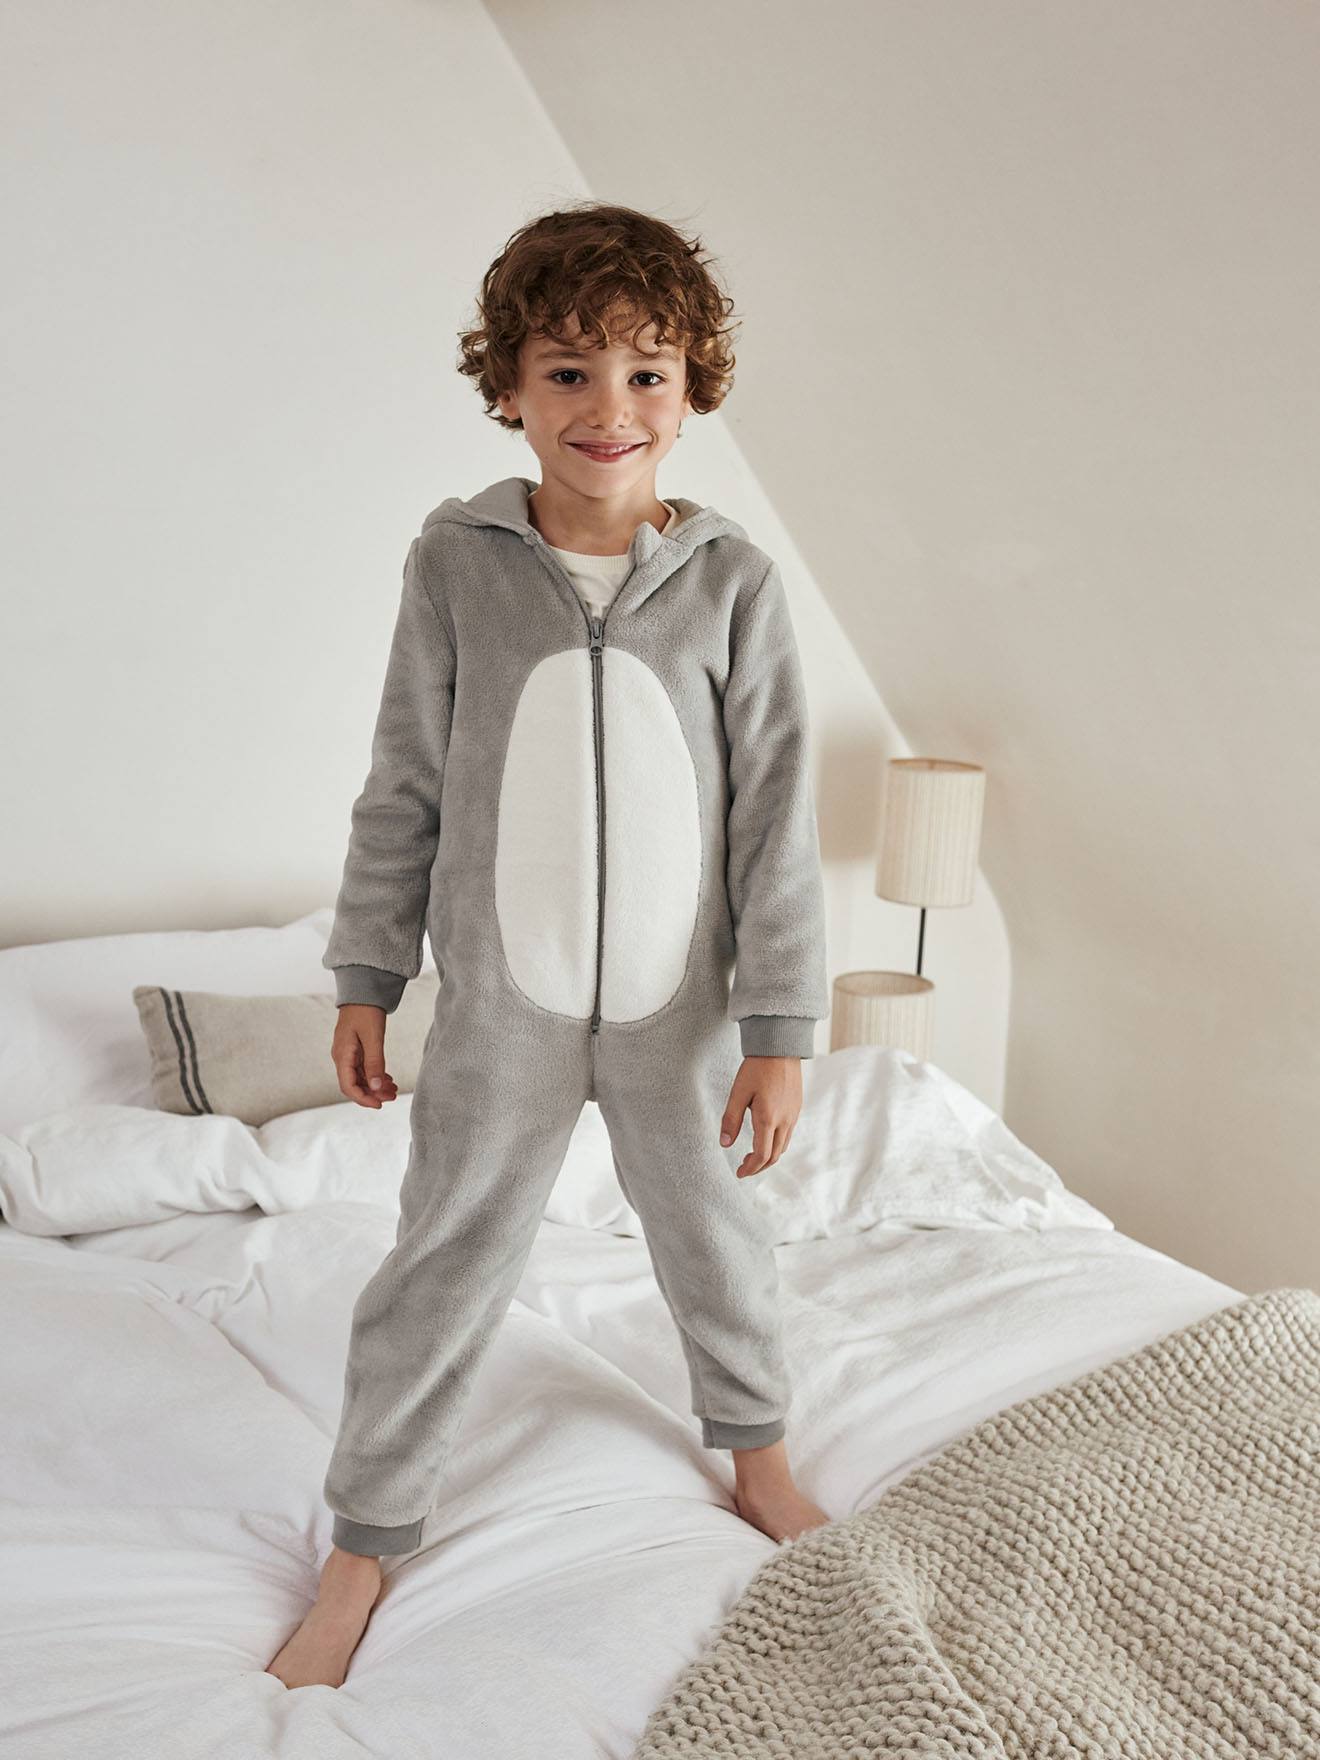 Combinaison Pyjama Garçon Loup